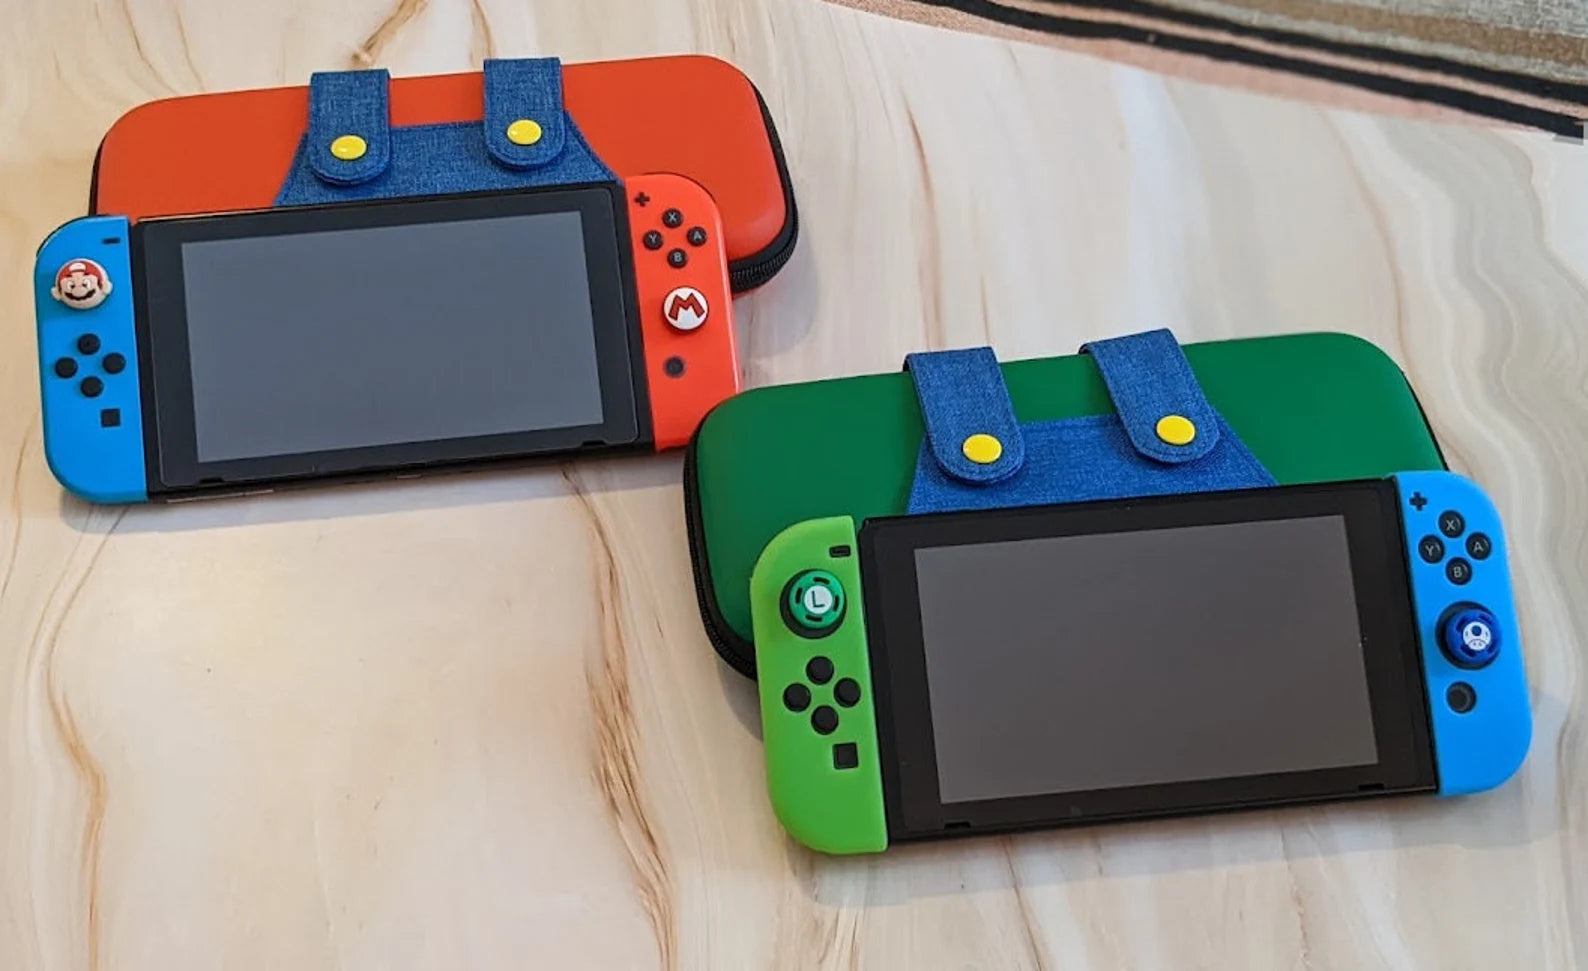 Switcheries  Mario & Luigi Case - Nintendo Switch OLED